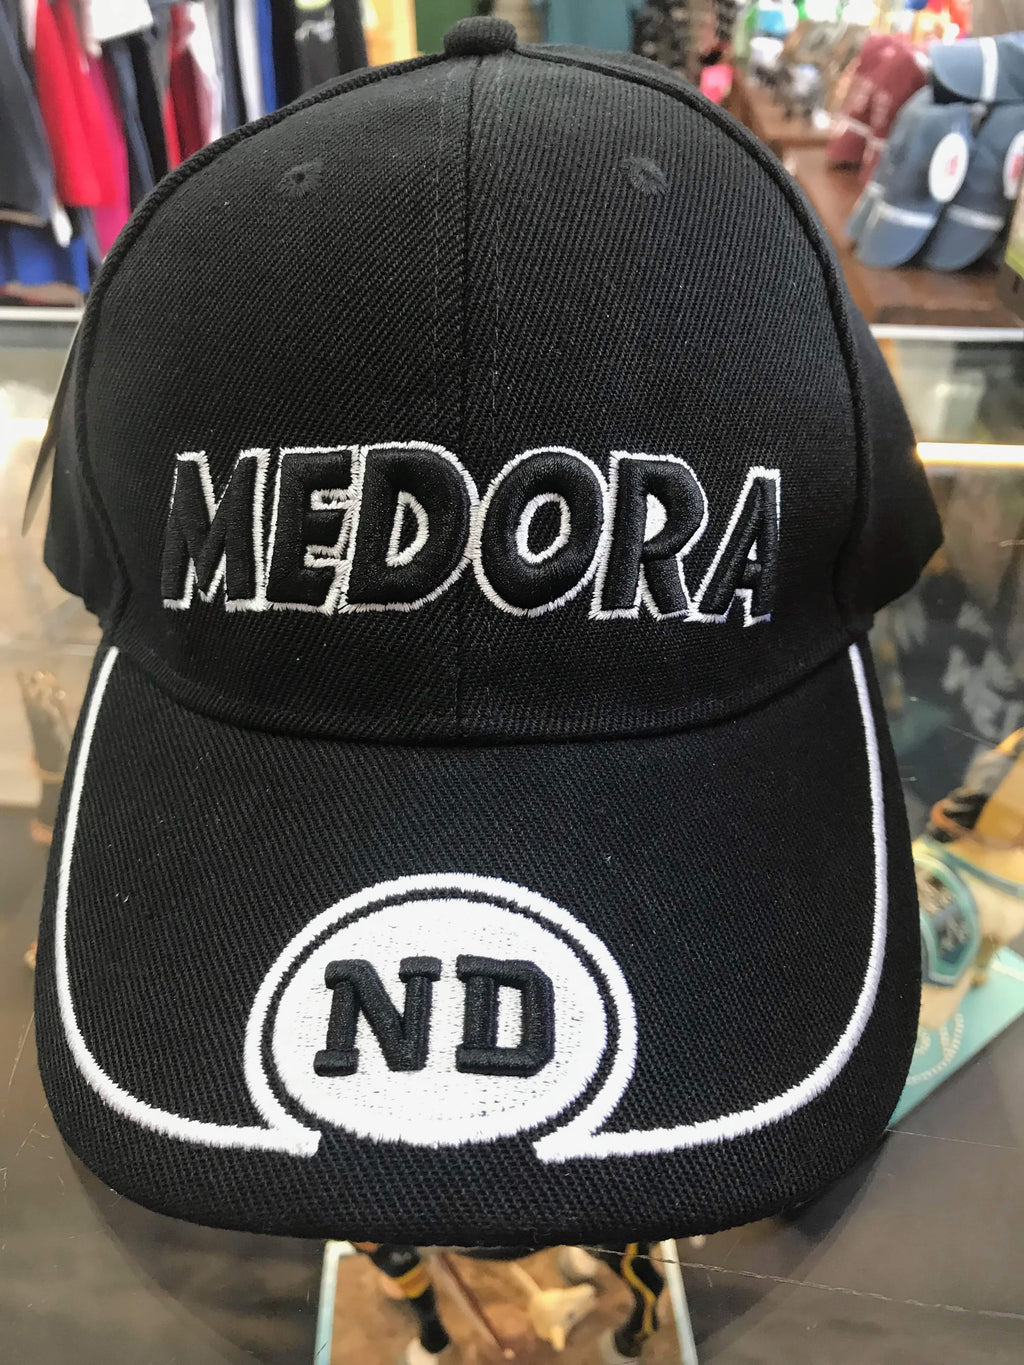 Medora, ND Adjustable hat